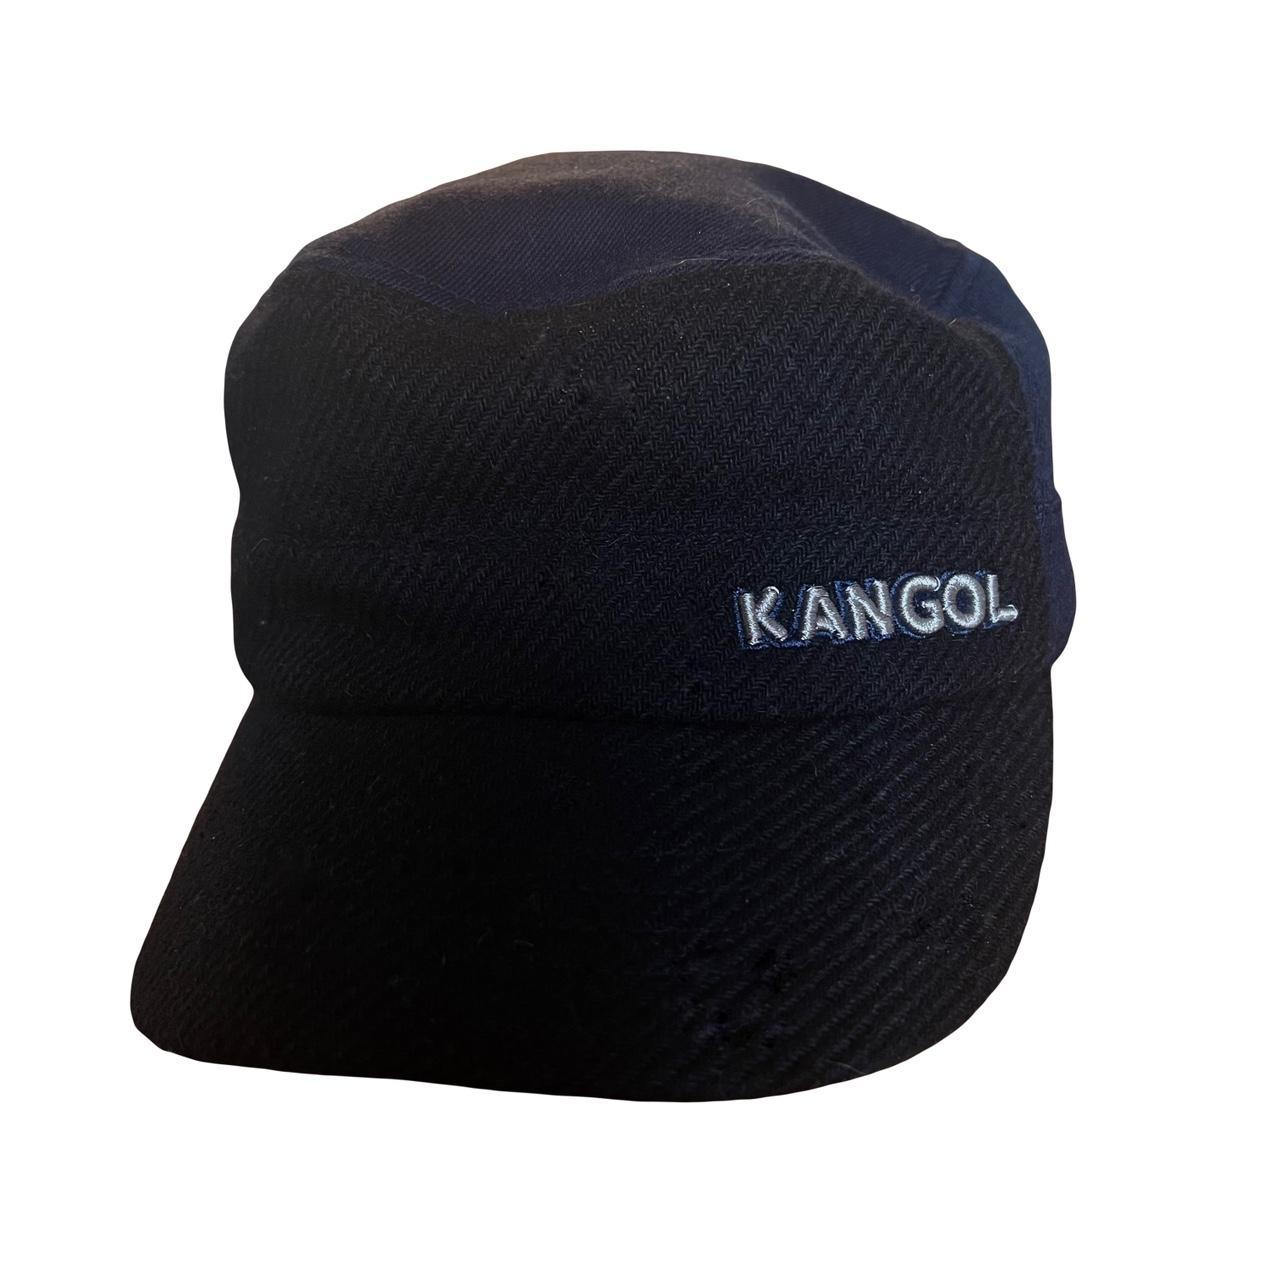 Kangol Men's Black and Navy Hat | Depop